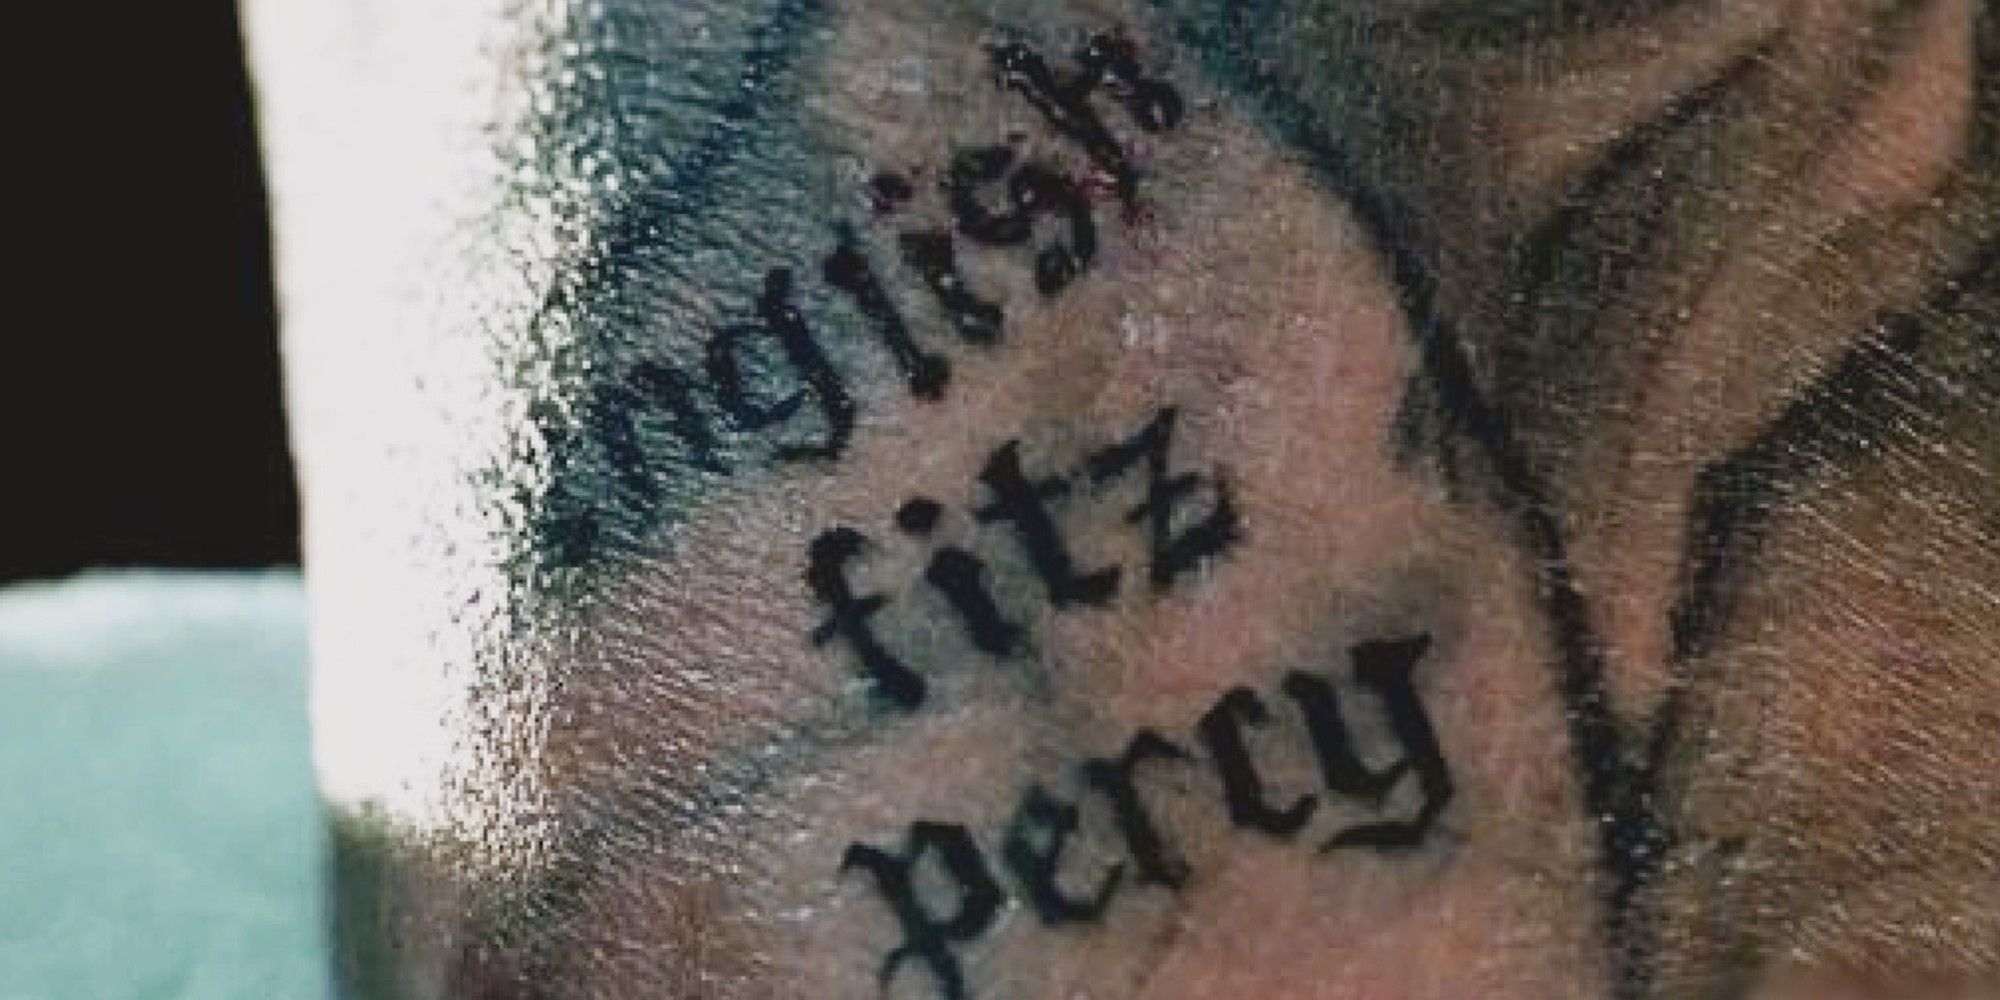 Michael Scofield Tattoo #1 by spiketheblody on DeviantArt